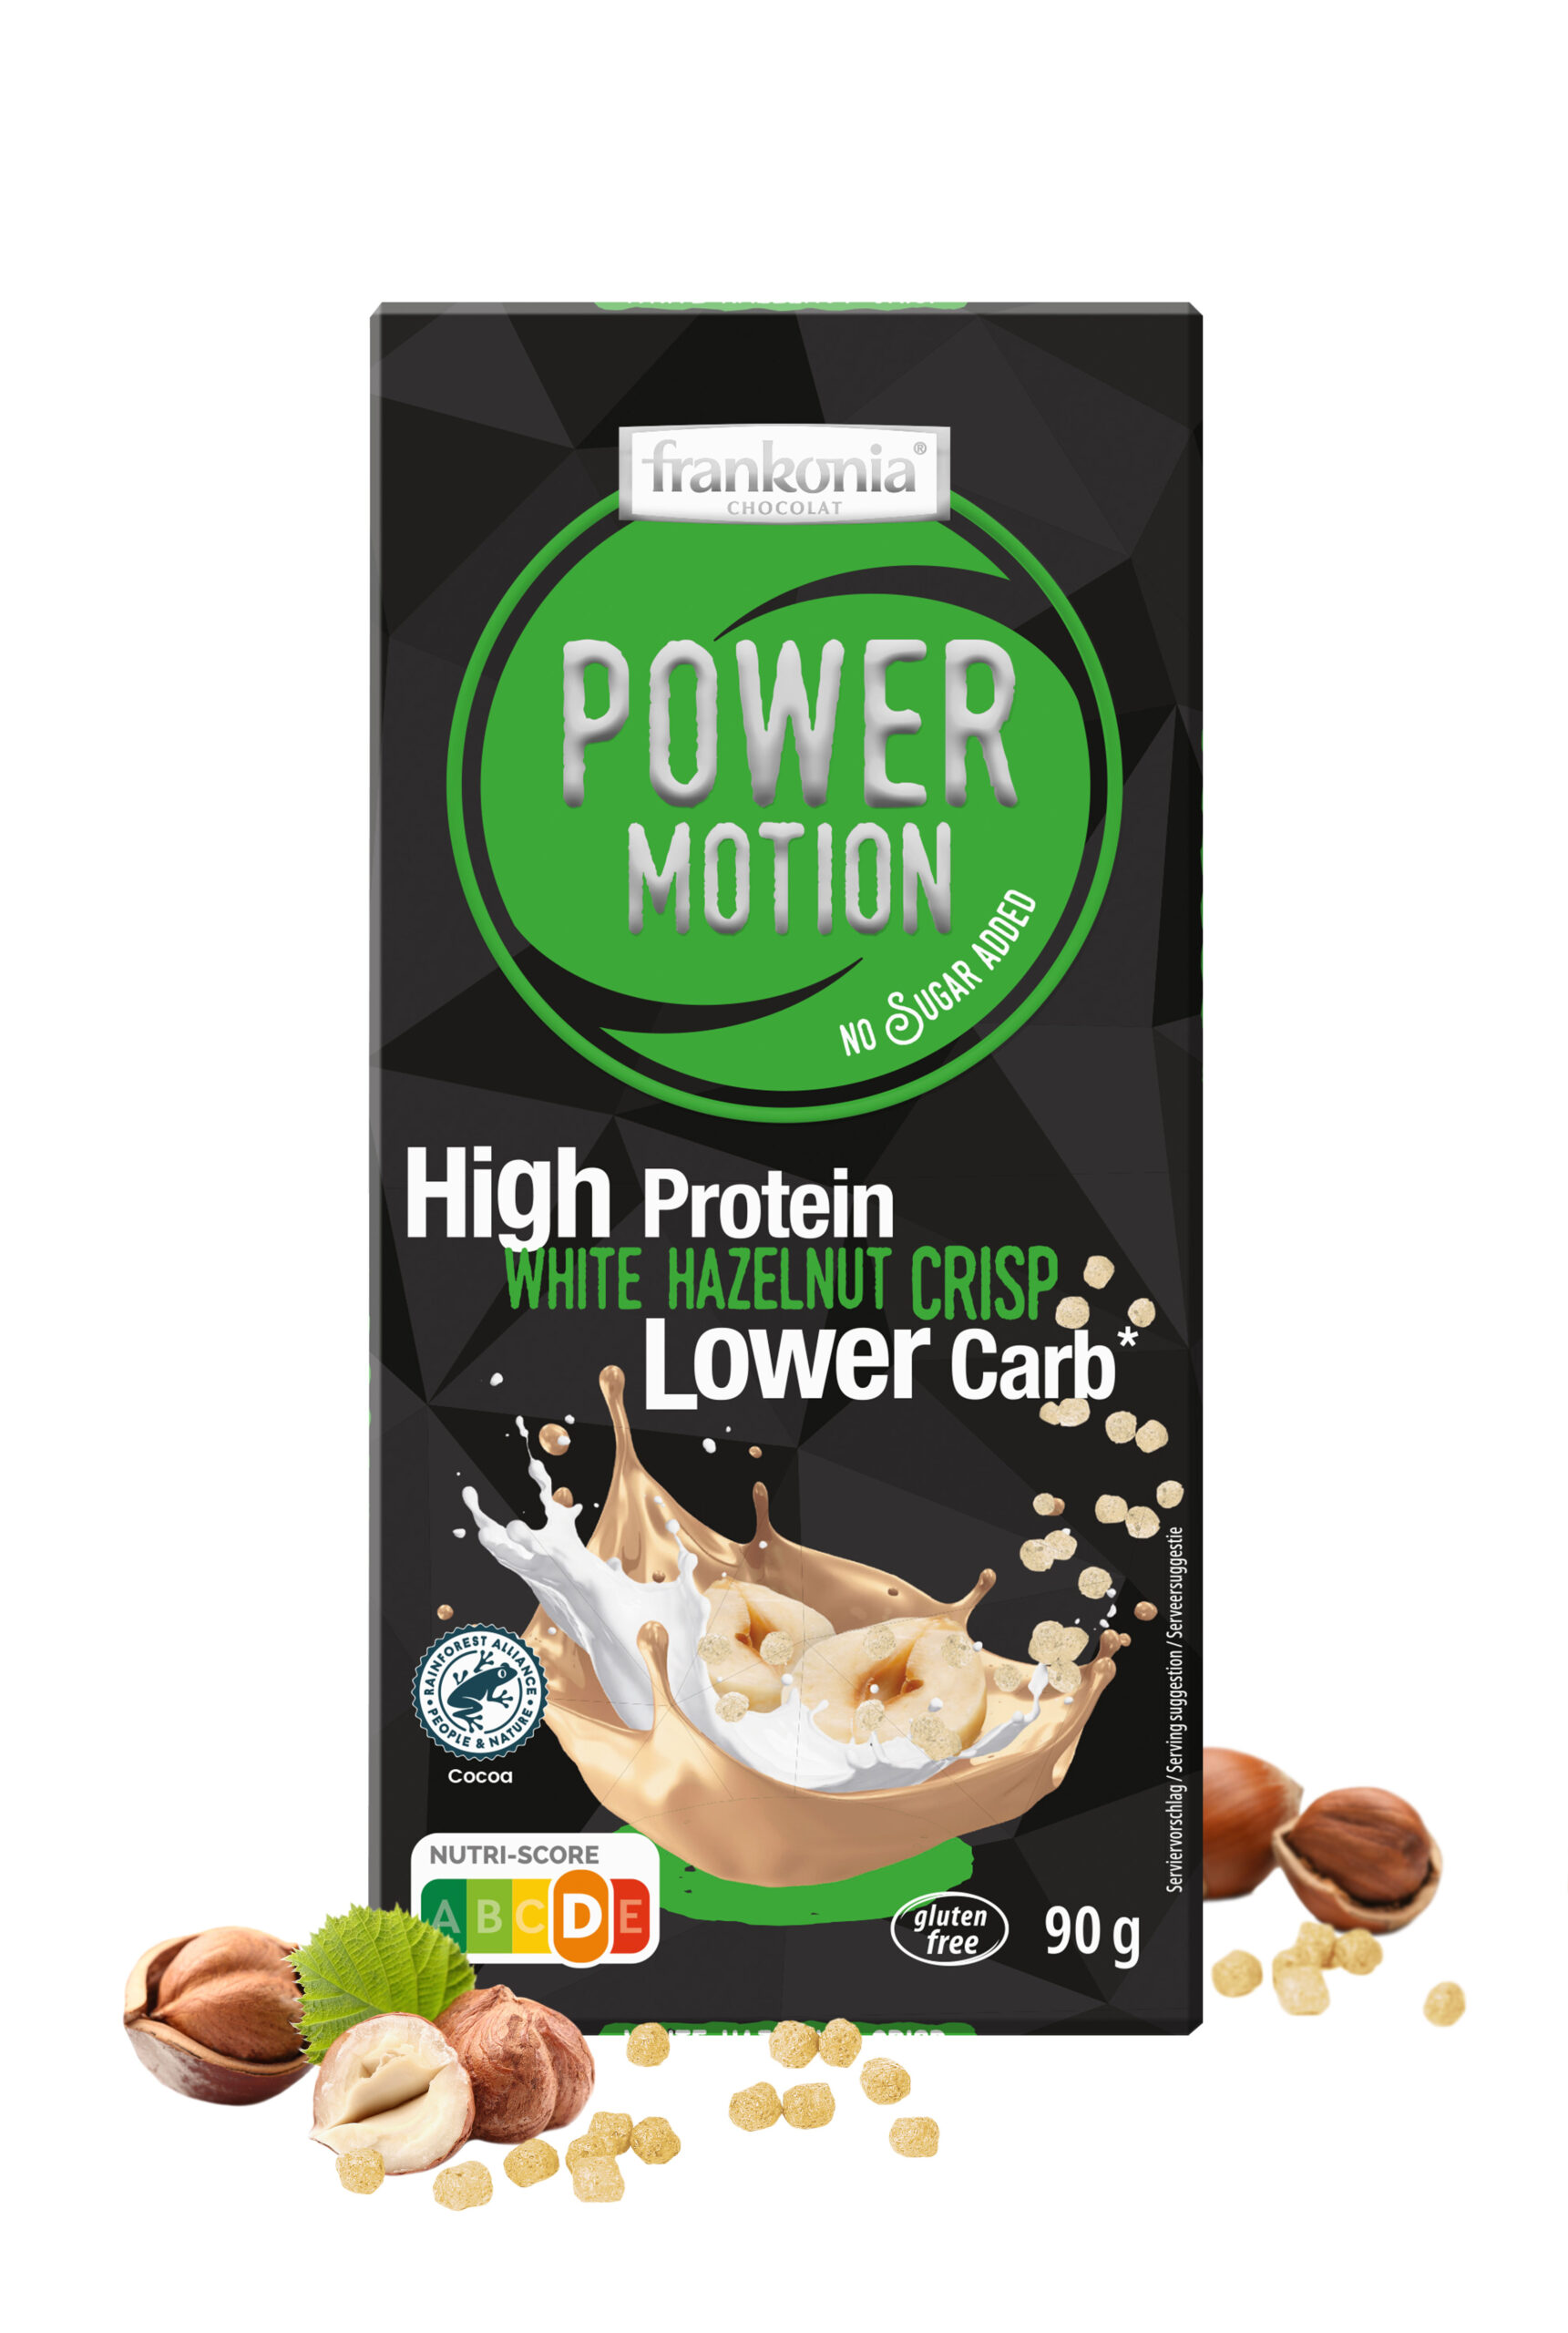 Power Motion High Protein White Hazelnut Crisp